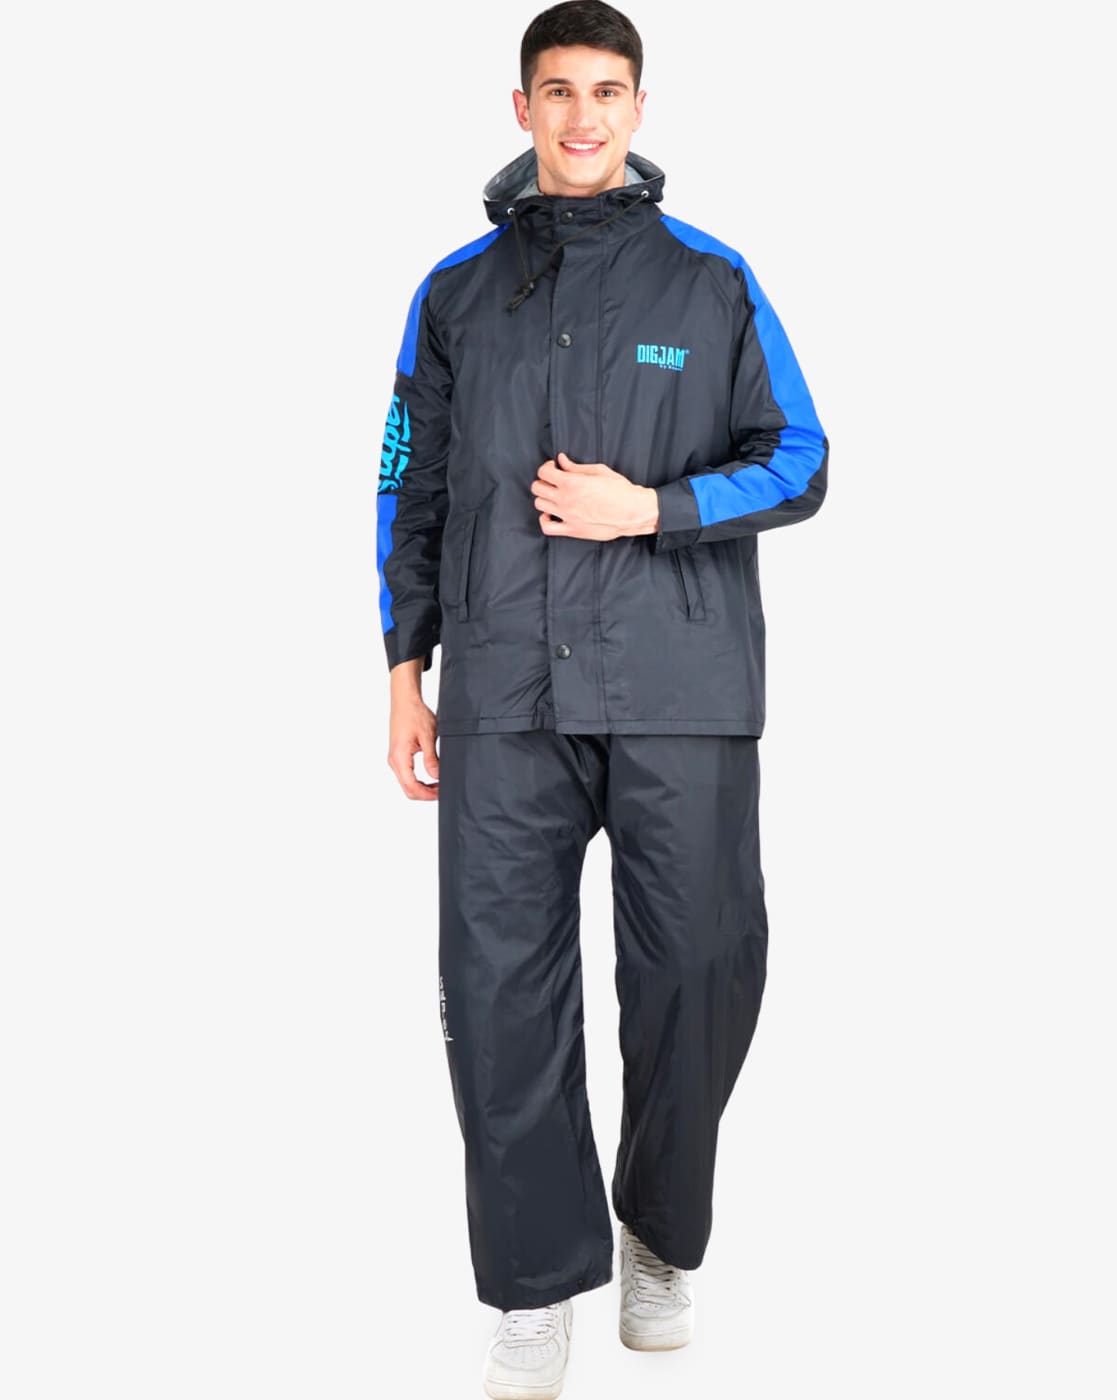 Pearl Izumi Waterproof pants and Jacket